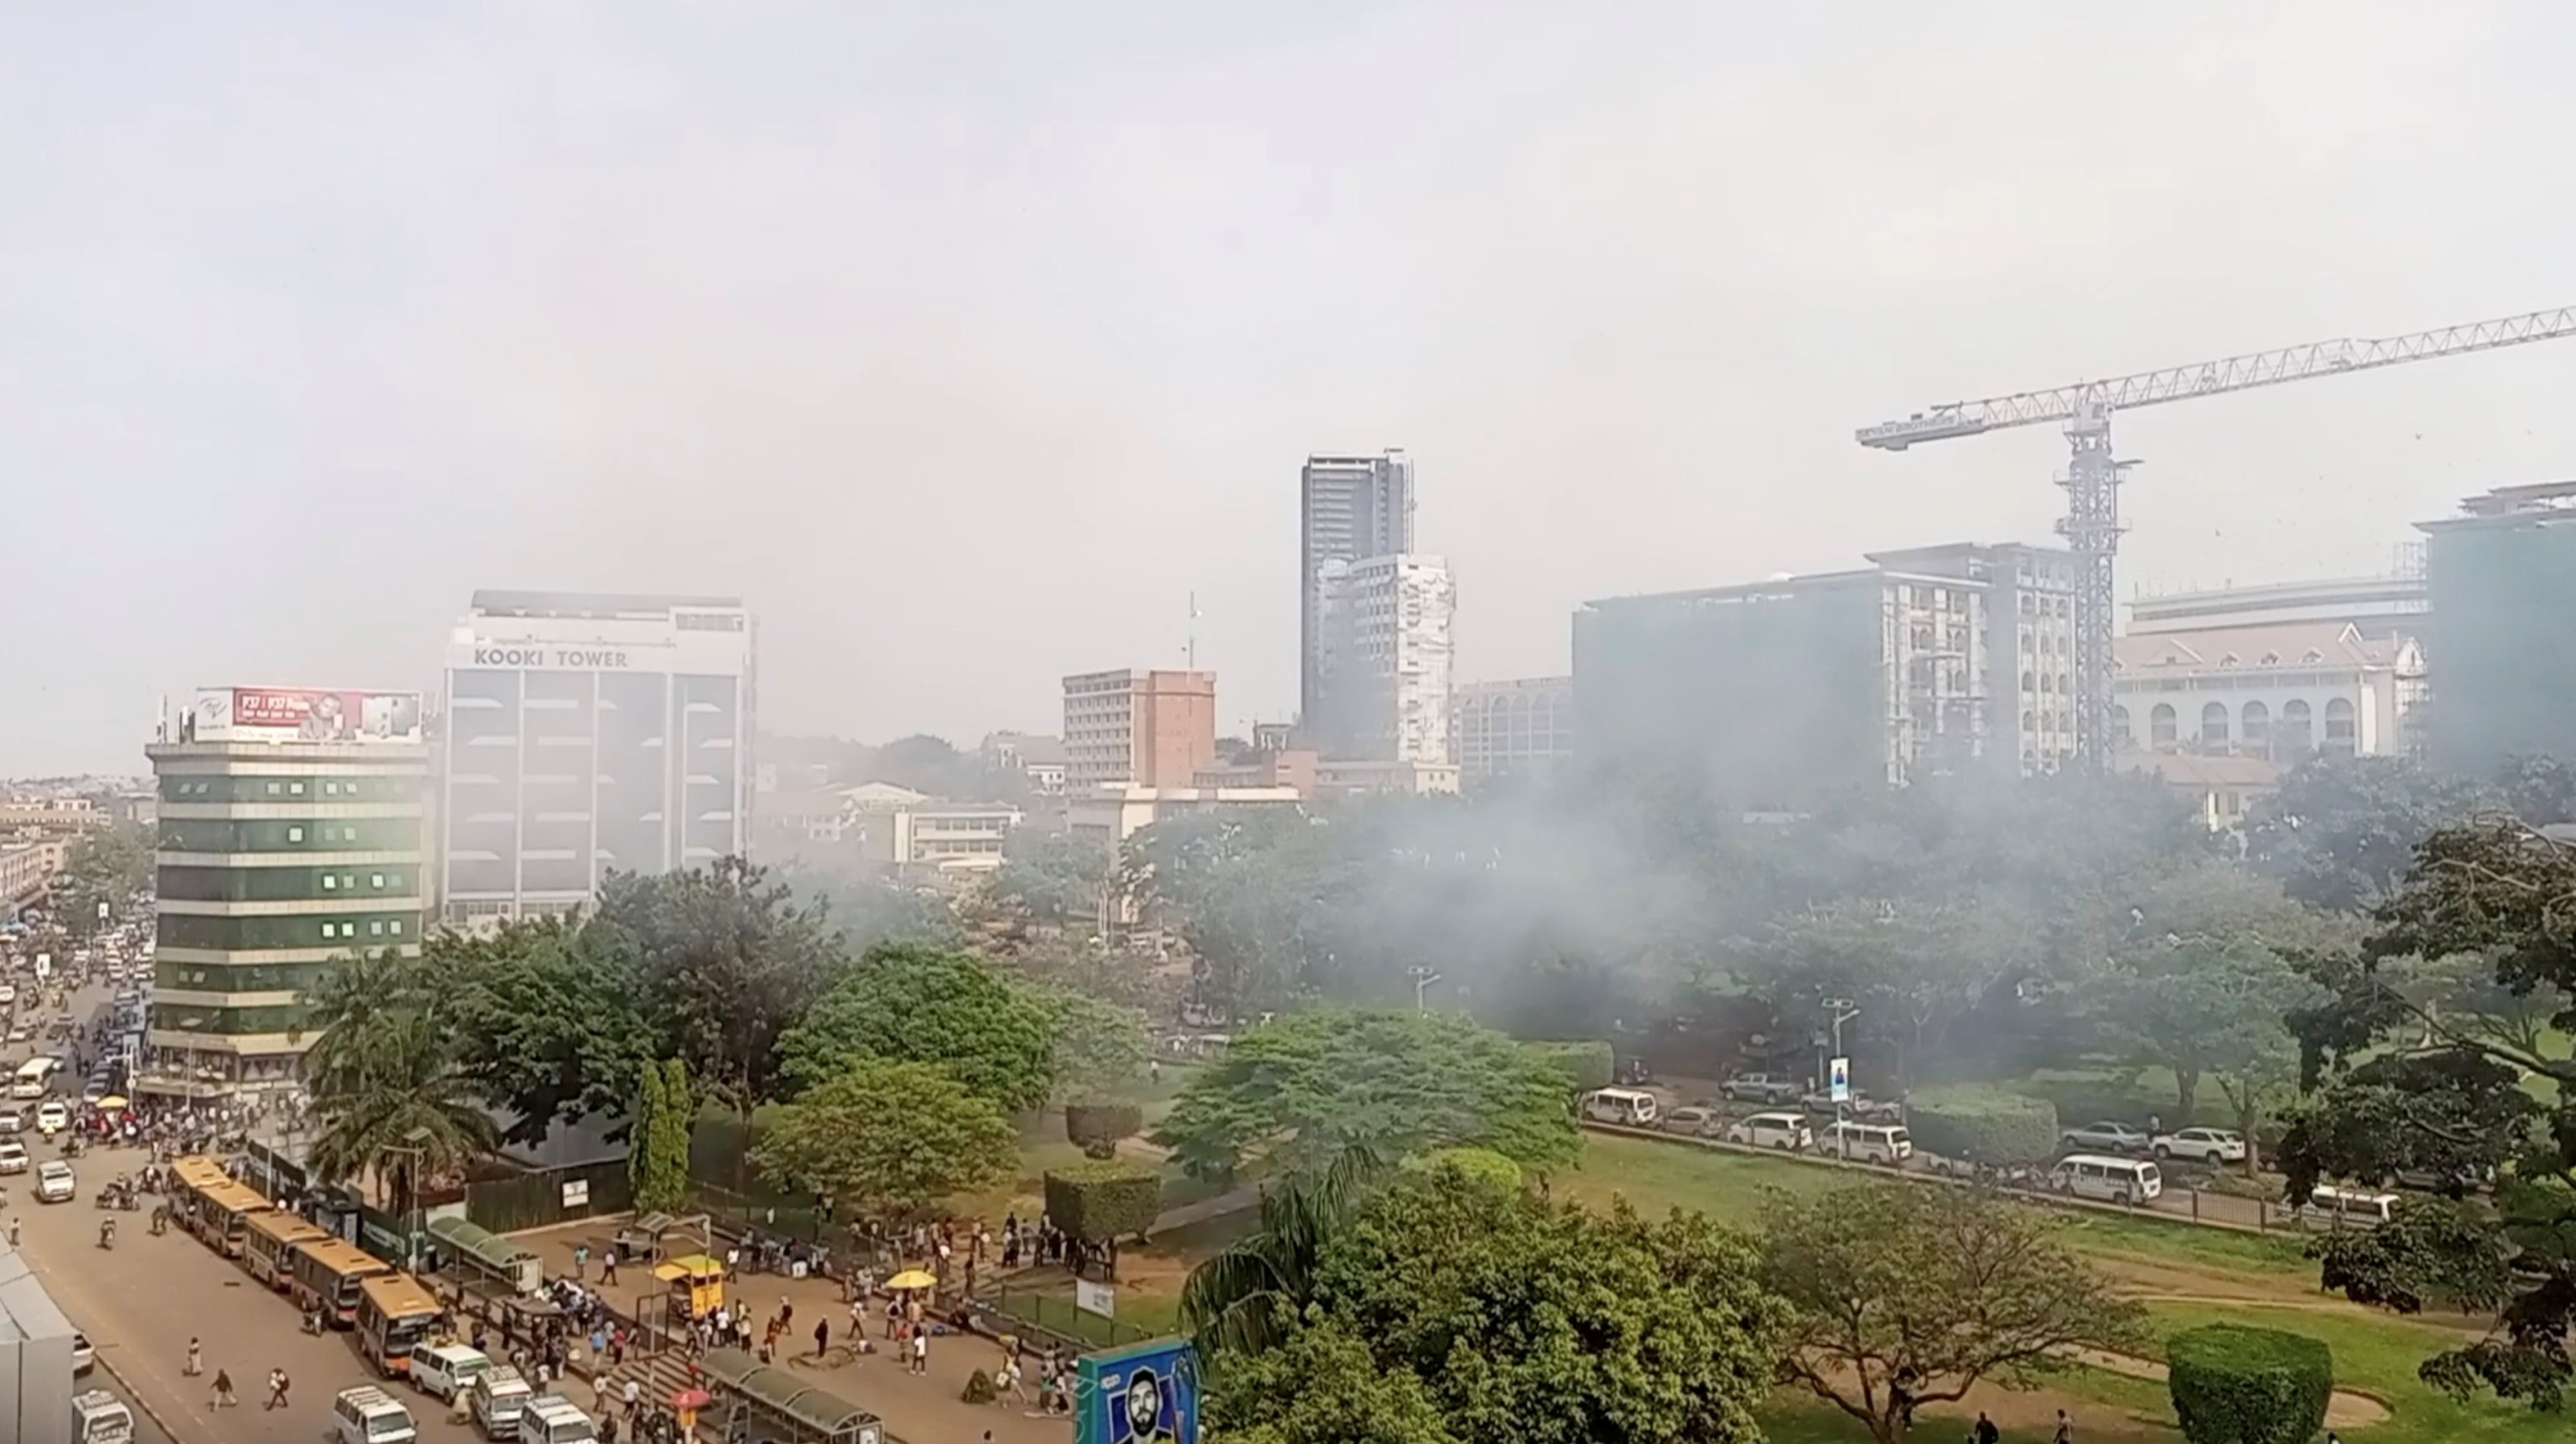  In this still image obtained from a social media video, smoke rises near the blast area, in Kampala, Uganda, Nov. 16, 2021. (Ssenyonyo Umaru via Reuters)